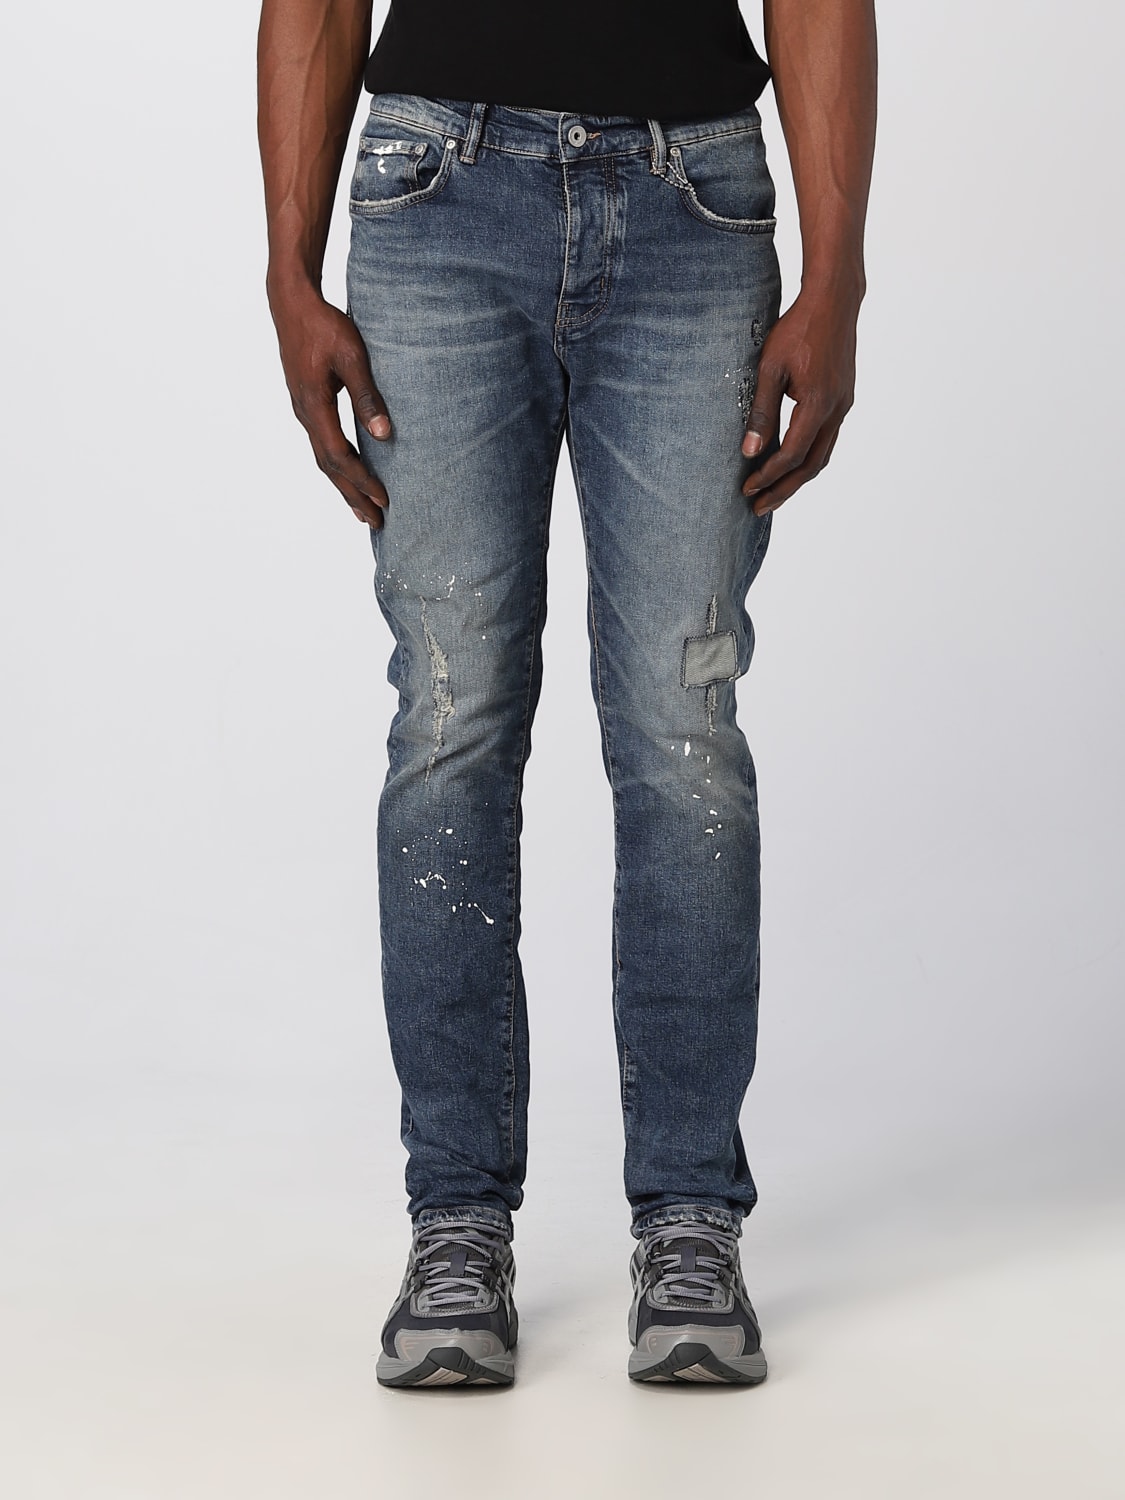 PURPLE BRAND Outlet: Jeans men - Black  PURPLE BRAND jeans P001TDIP online  at